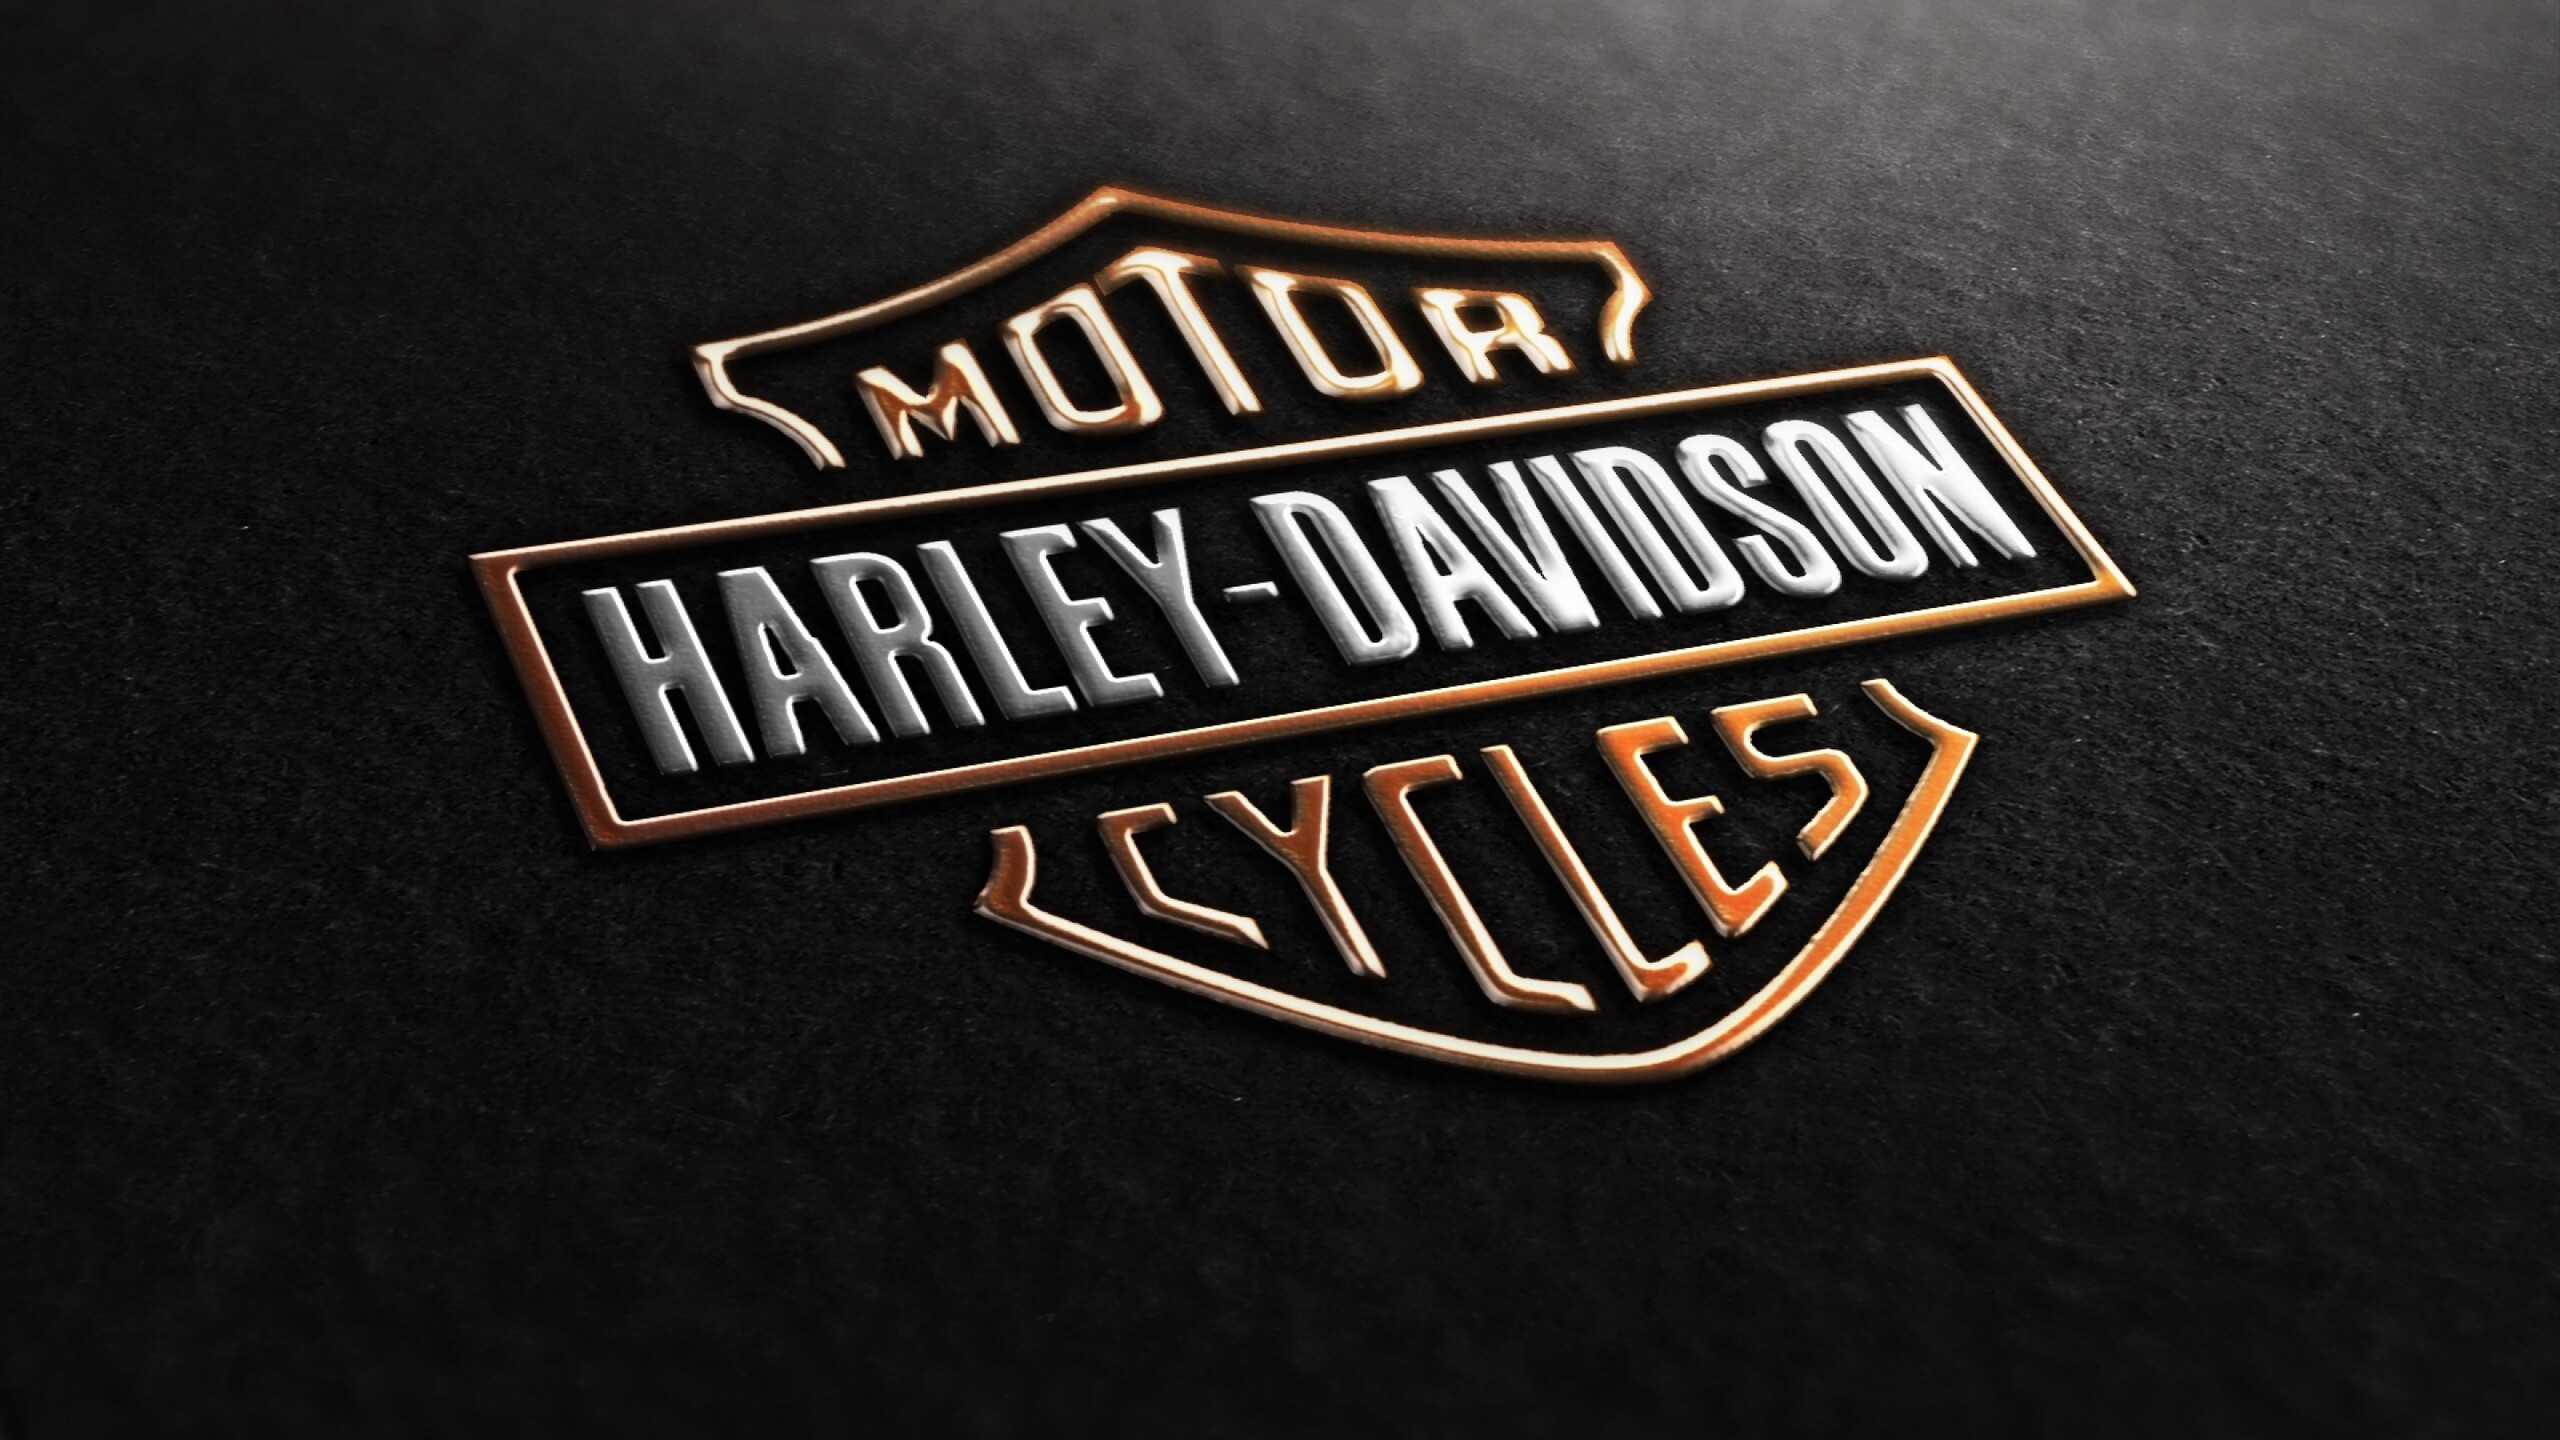 Cool Harley Davidson Wallpaper